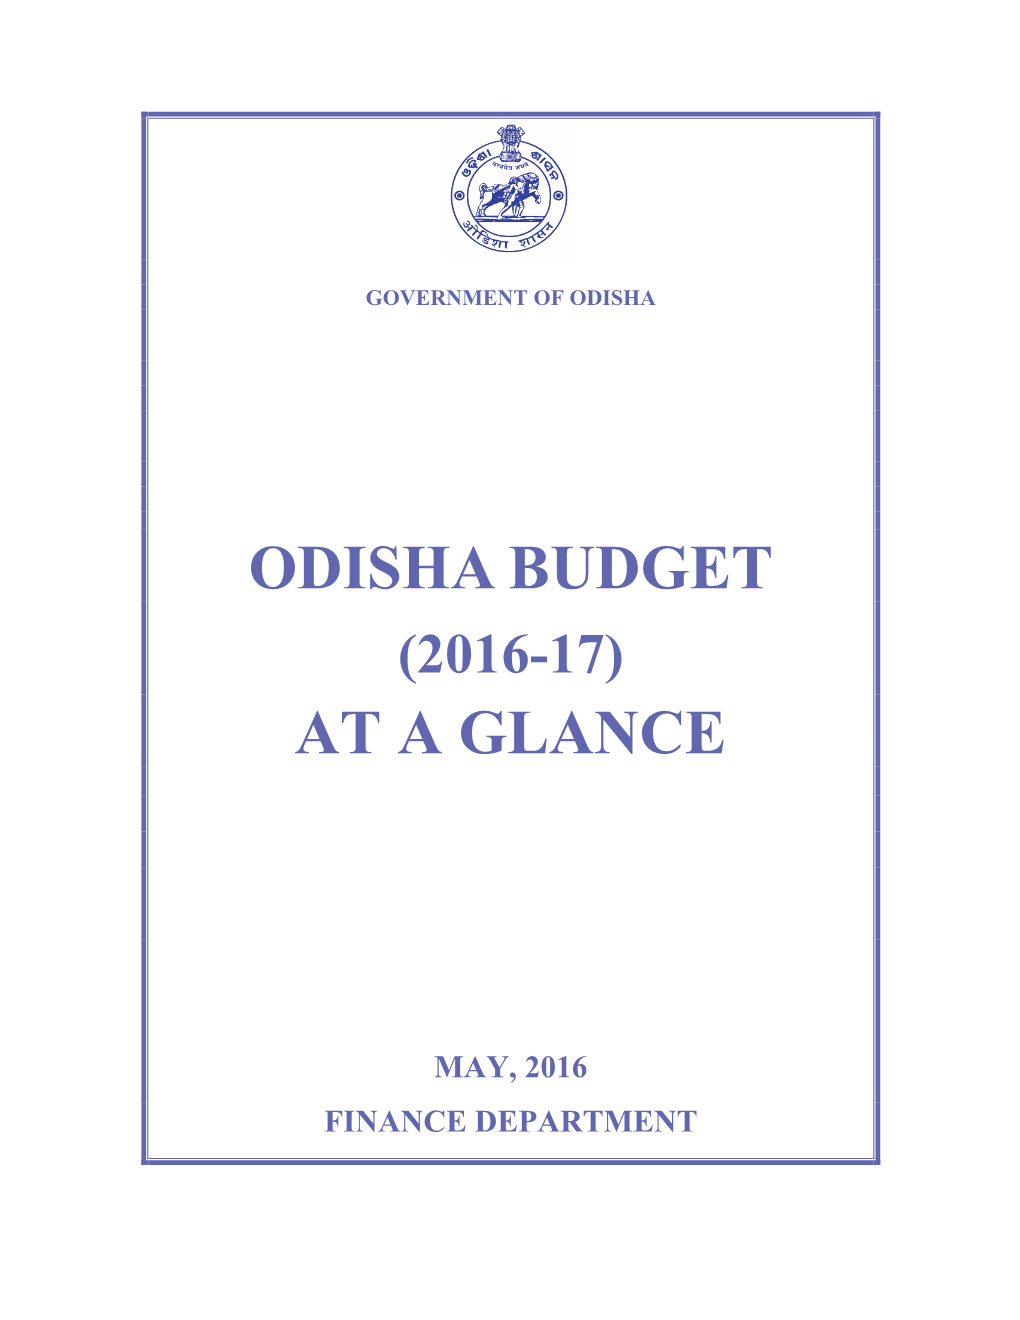 Odisha Budget at a Glance, 2016-17 1/1 1/22